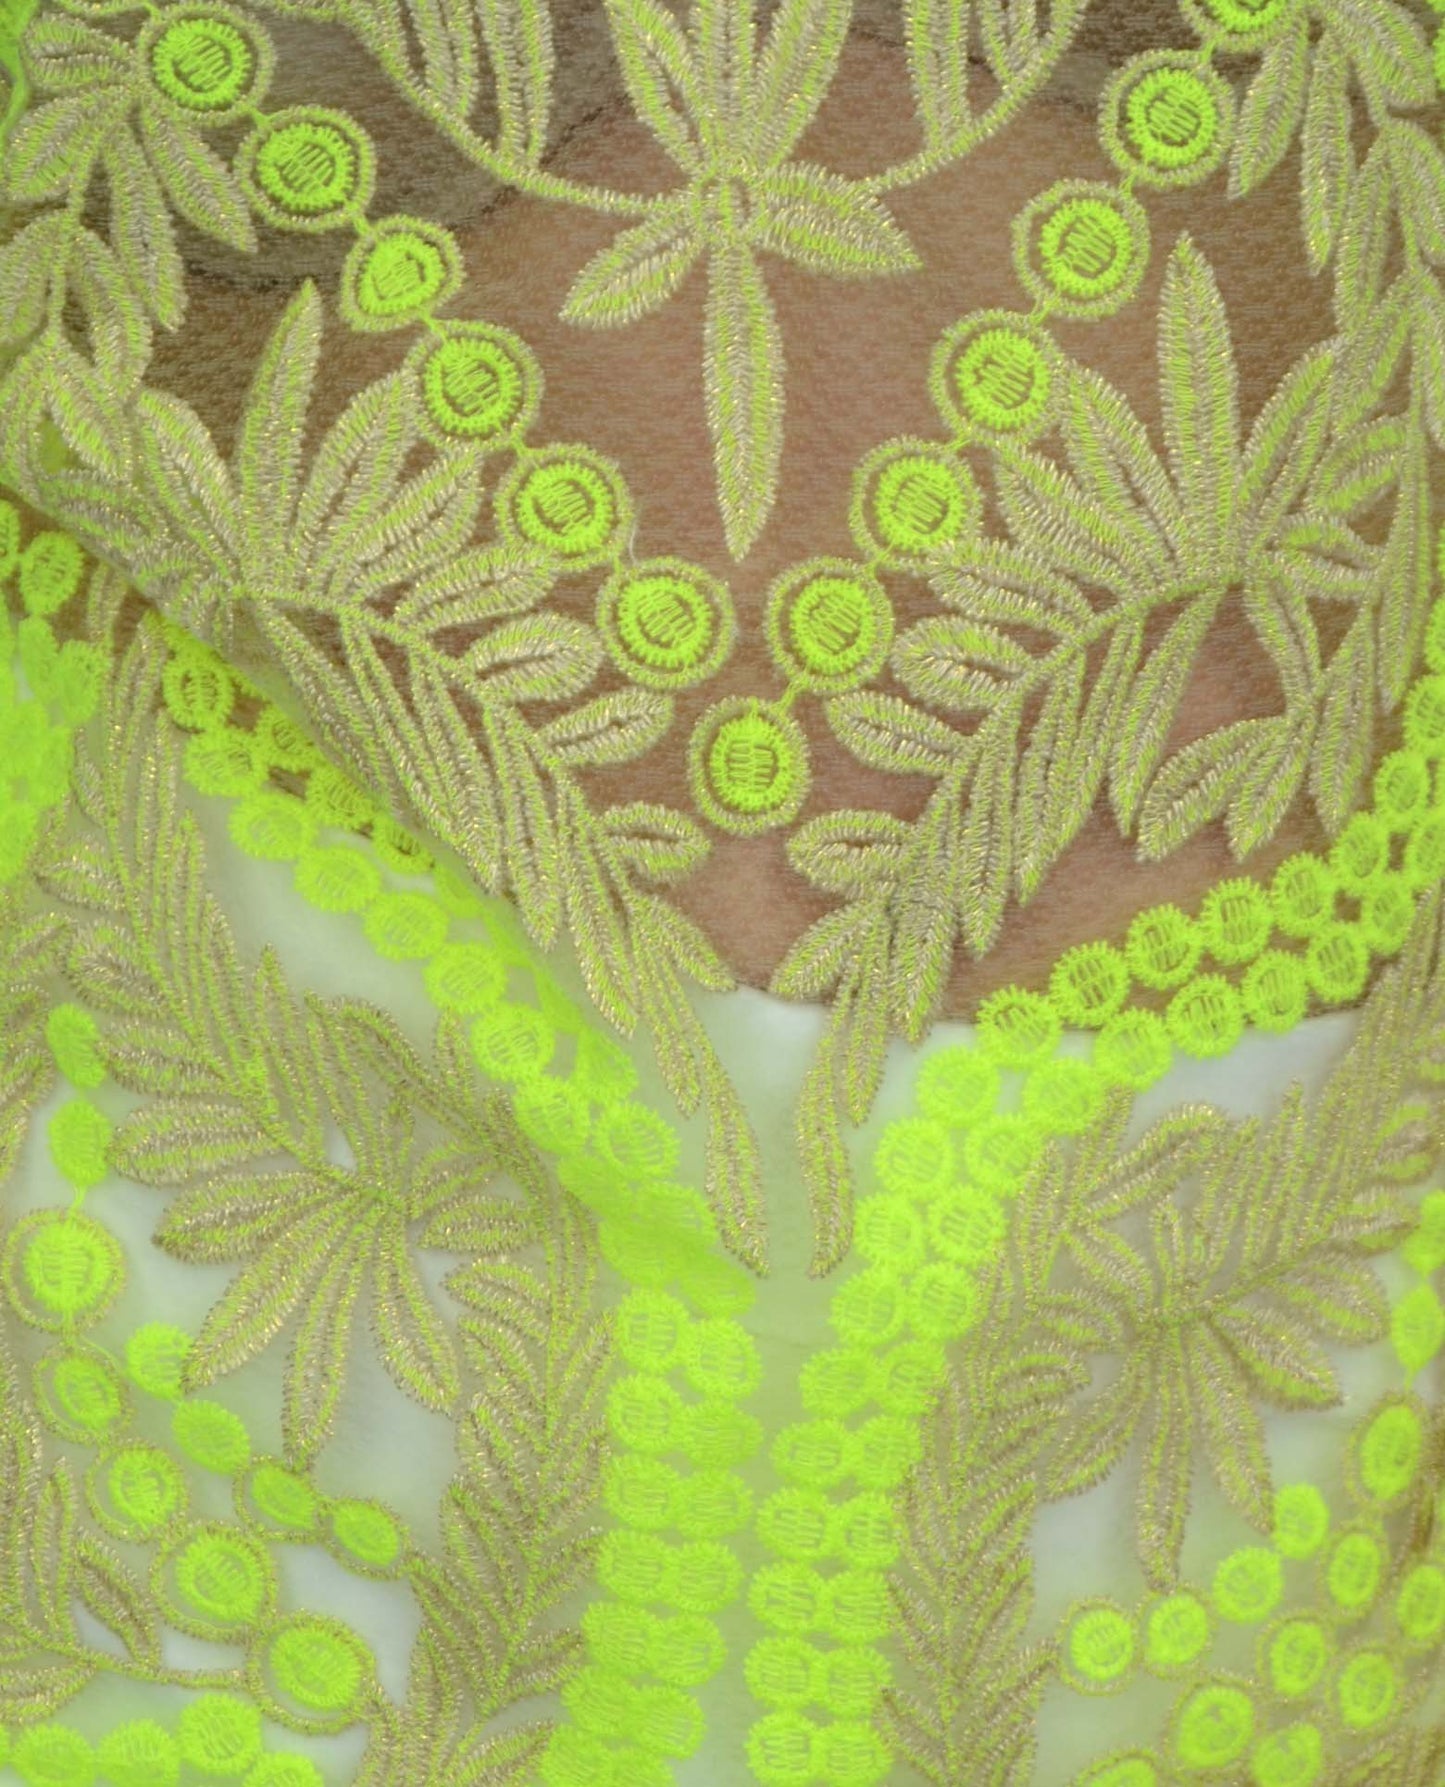 Yellow Green Sheer Floral Crochet Tank